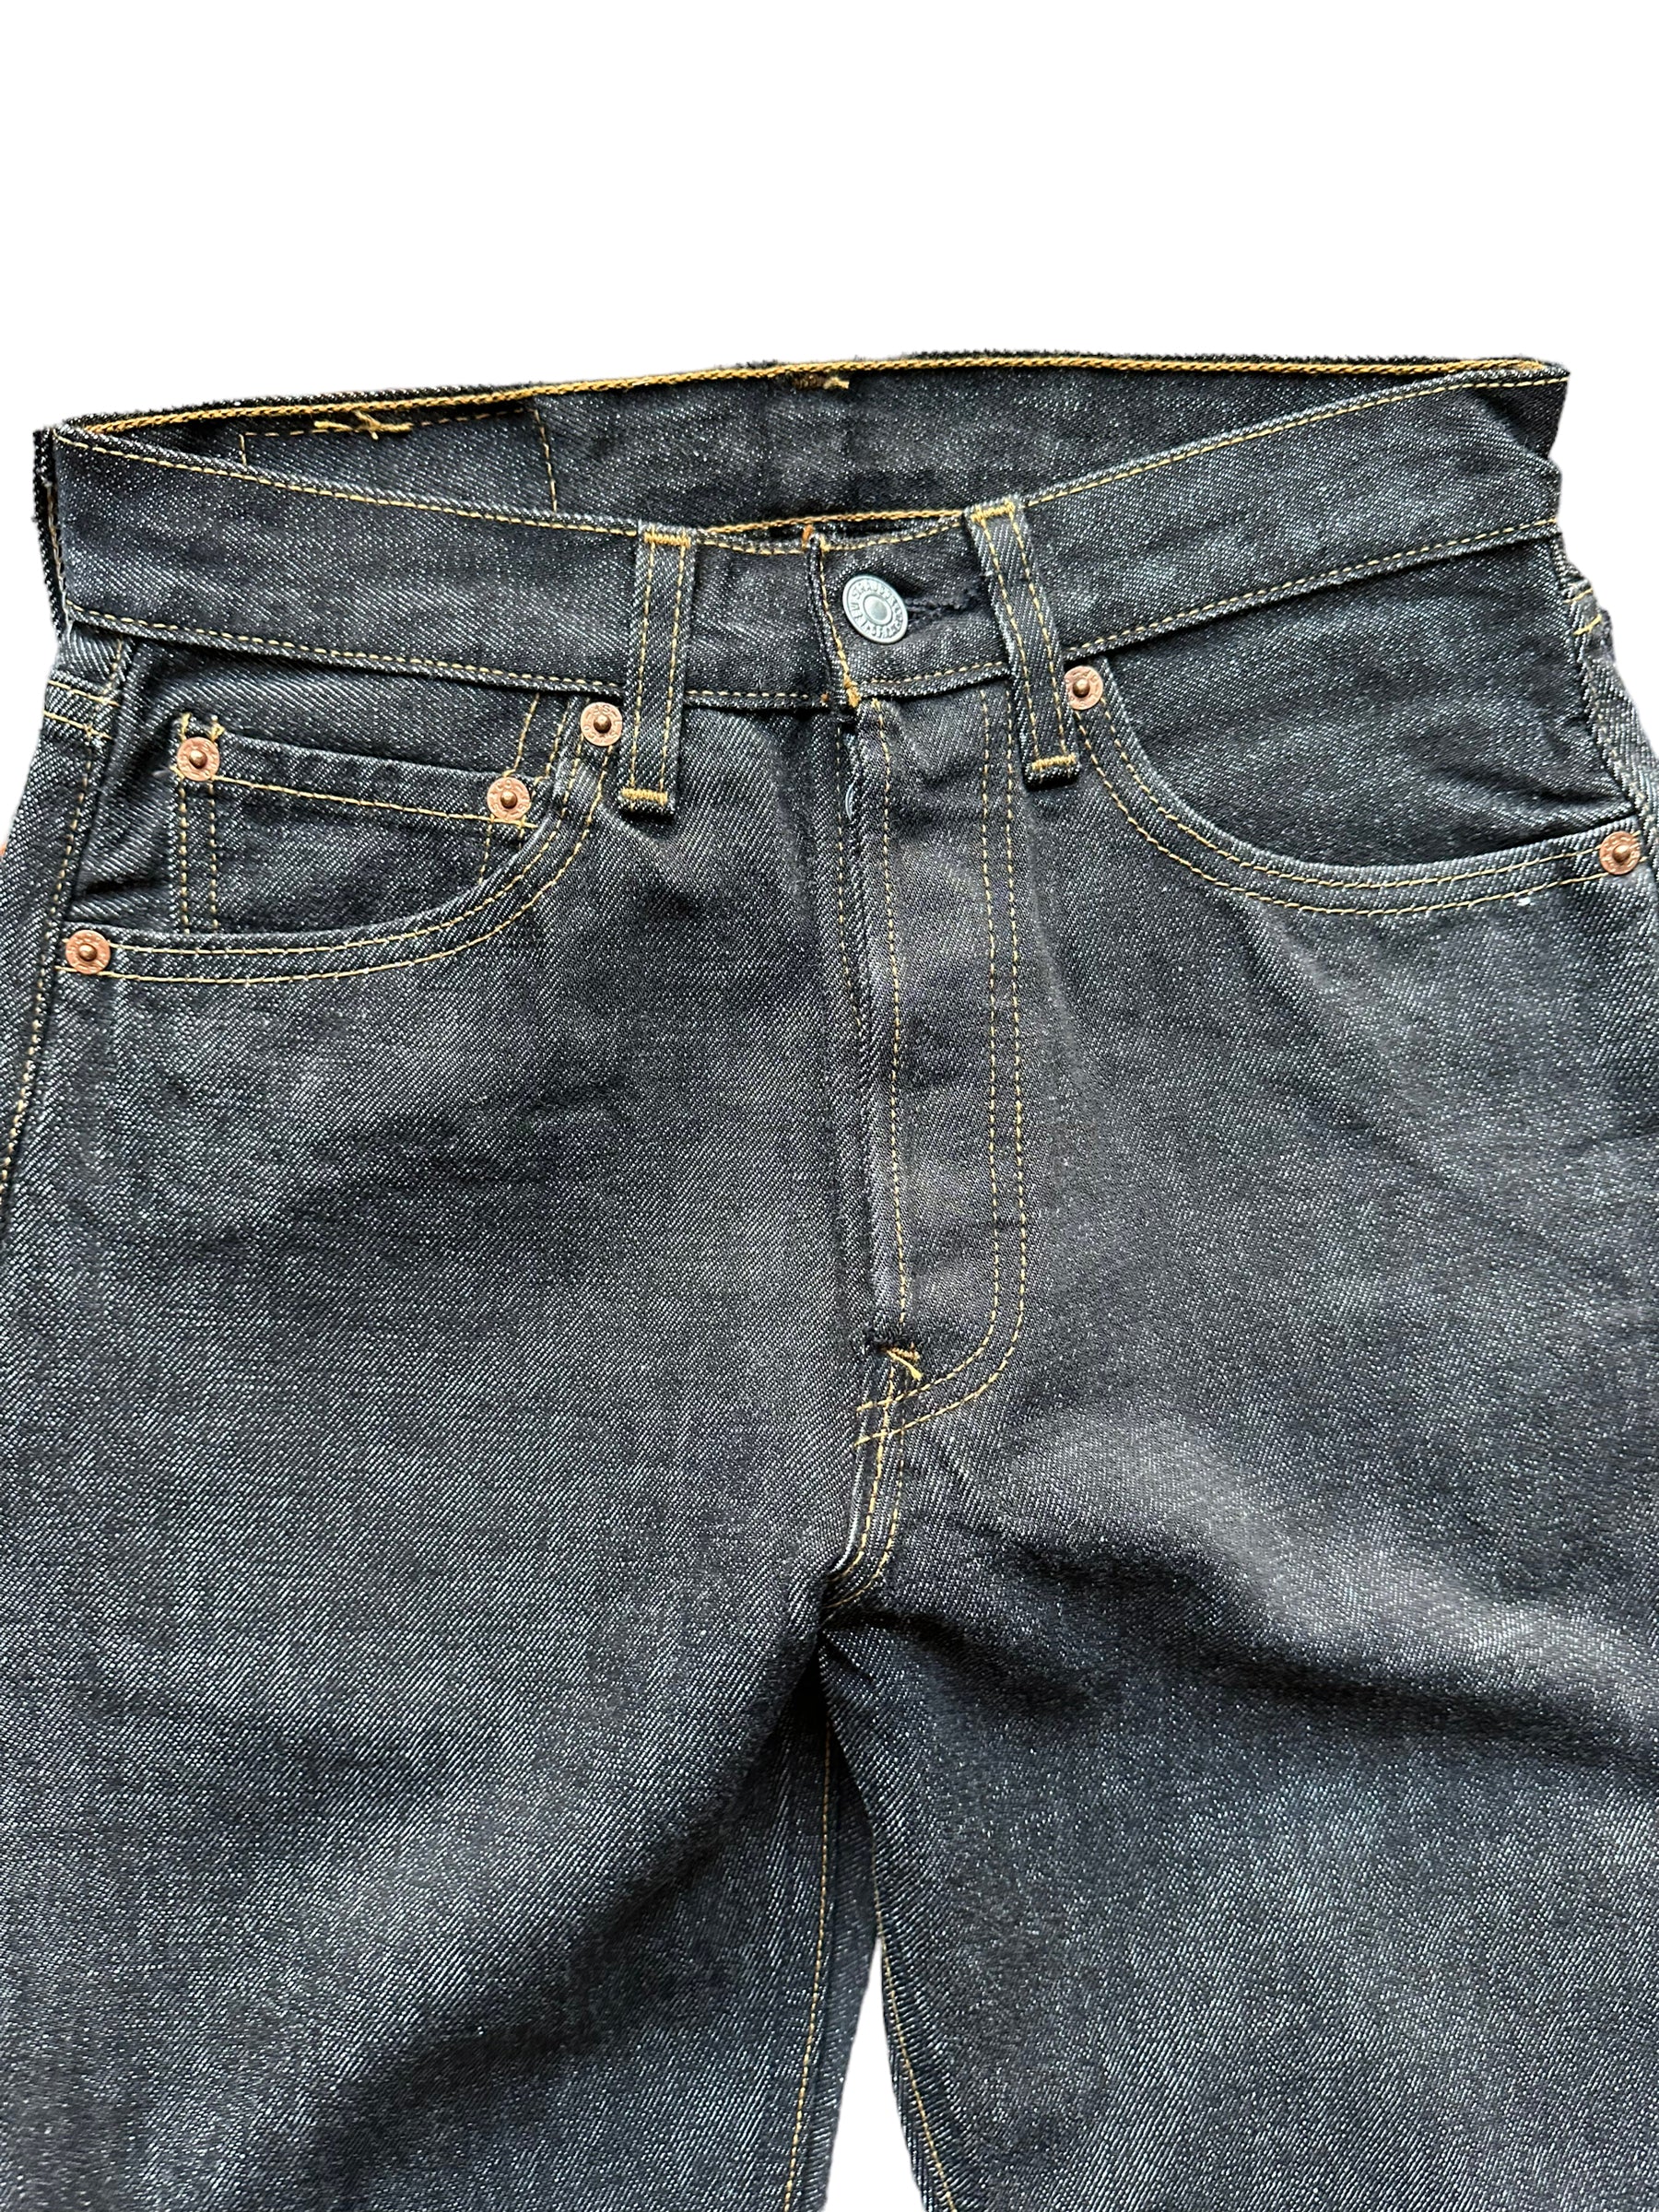 Deadstock 90s USA Levi's 501 Black Jeans 26x33 | Seattle Deadstock Vintage  Jeans | Barn Owl Vintage Denim